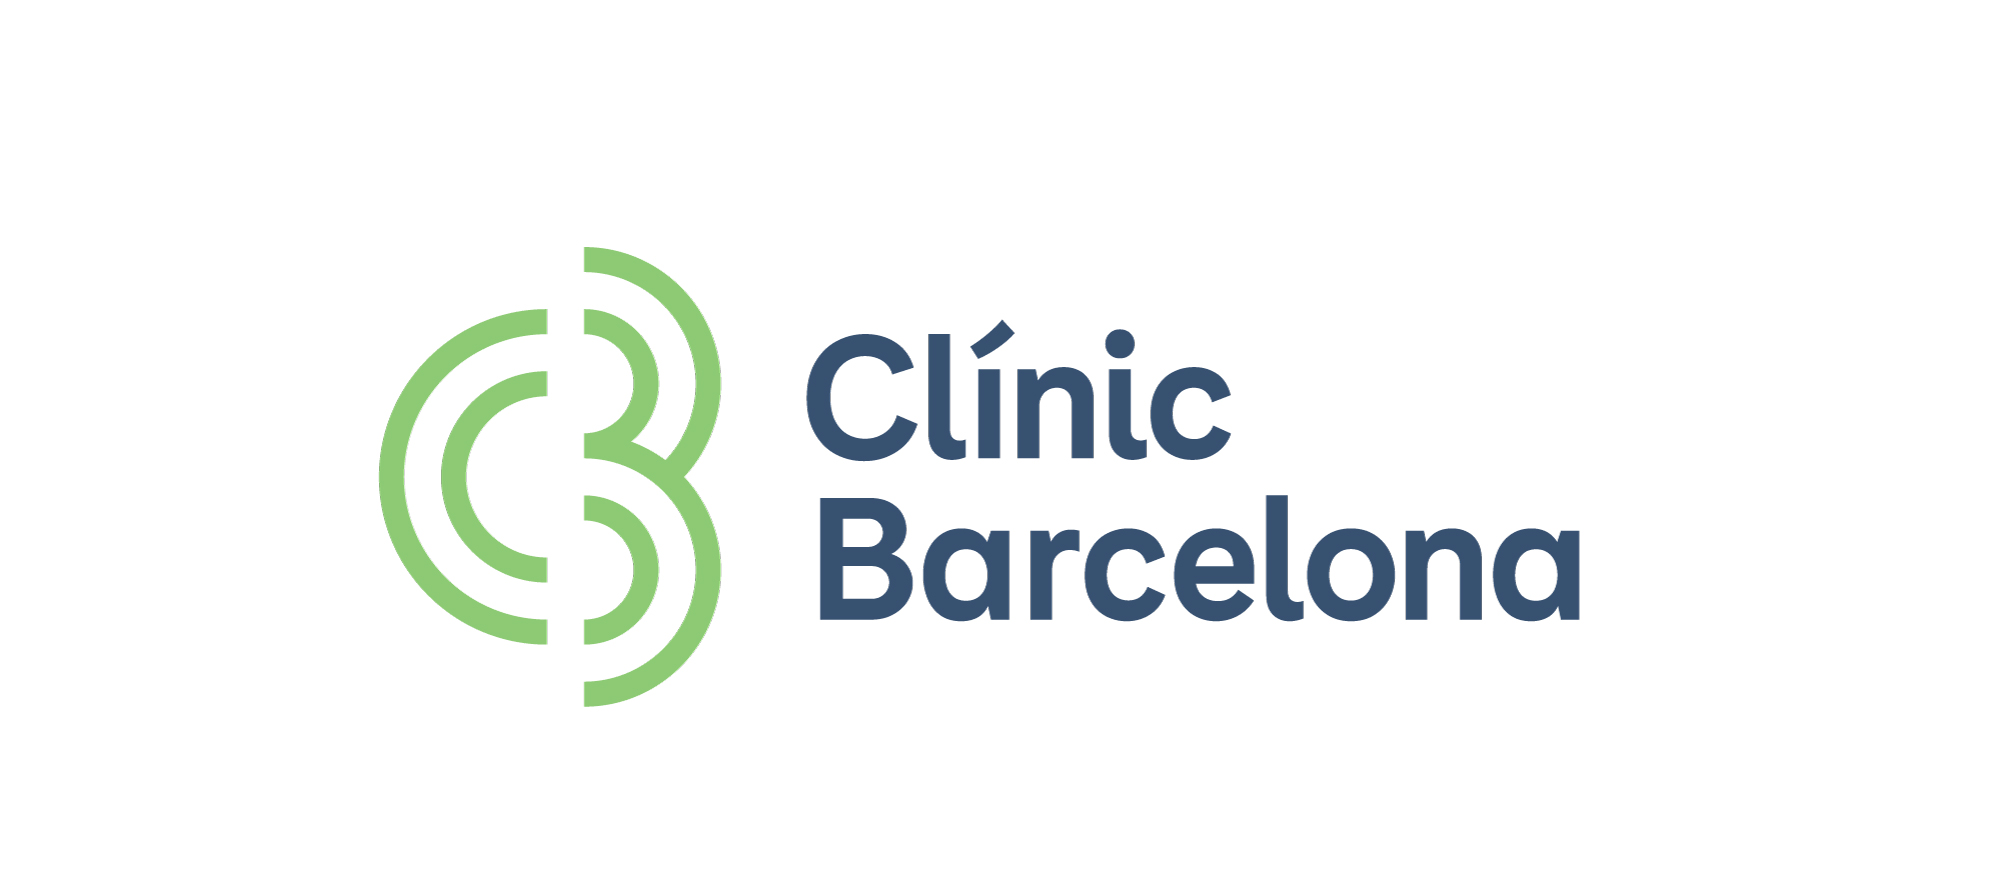 Logo Hospital Clinic Barcelona